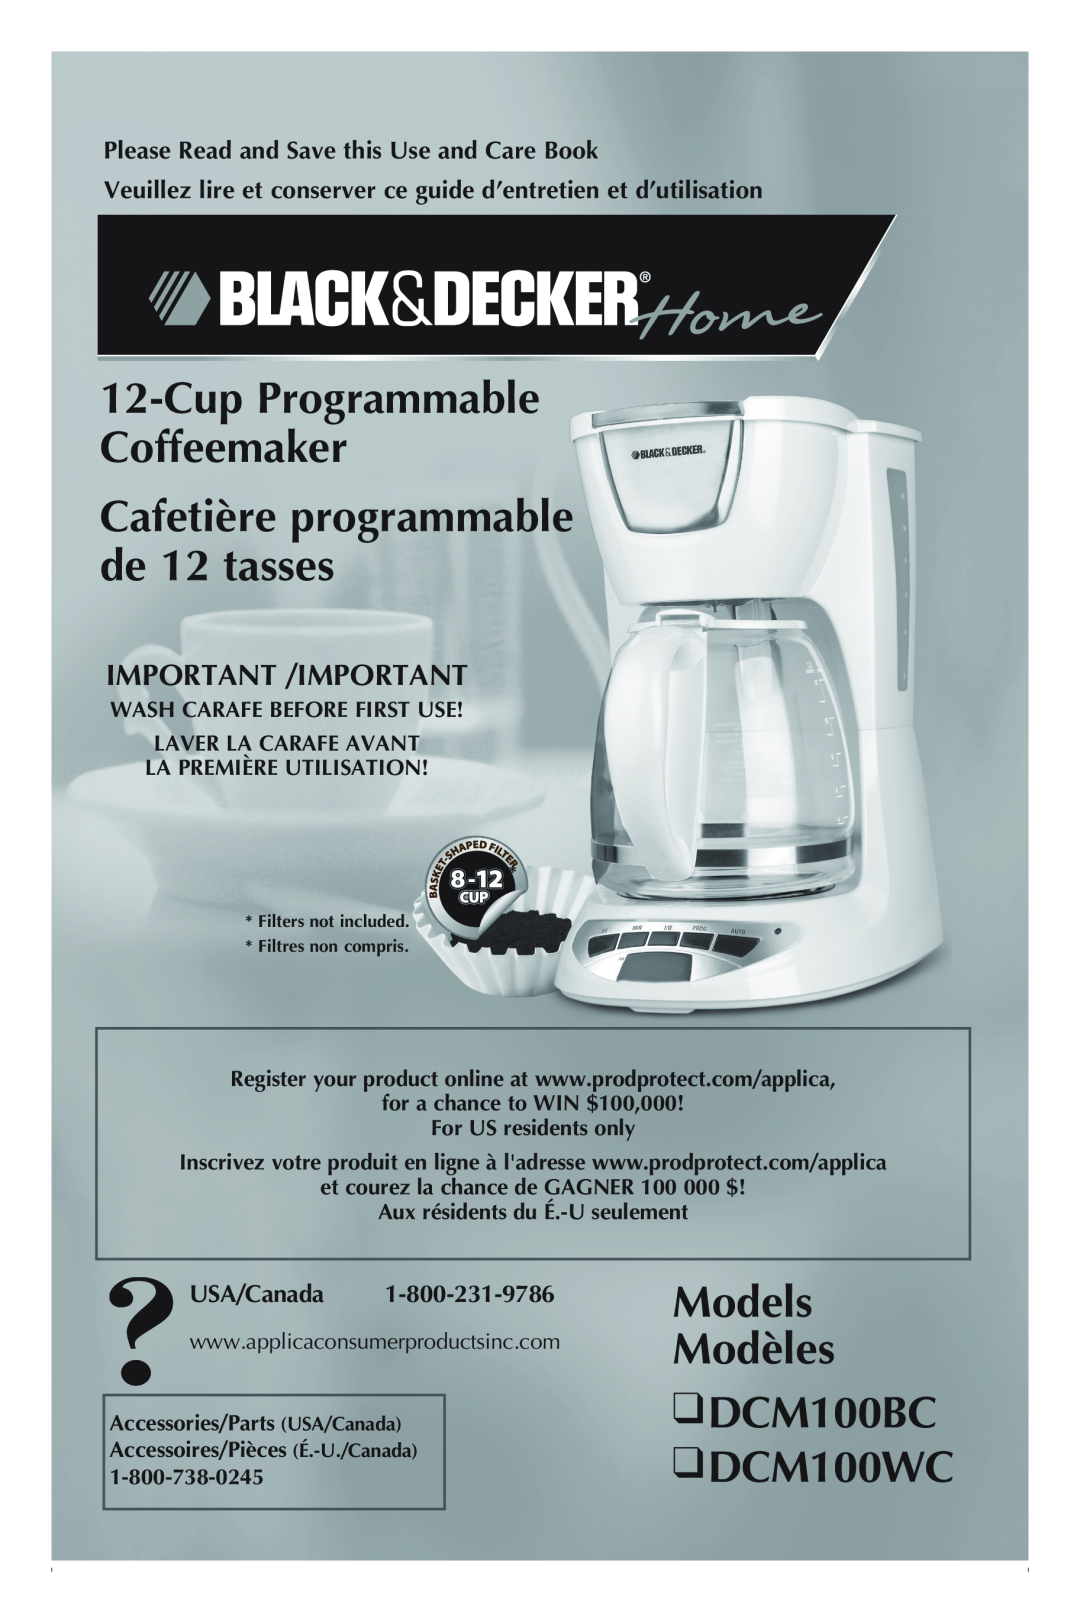 Black & Decker manual Models Modèles DCM100BC DCM100WC, CupProgrammable Coffeemaker, Important /Important, USA/Canada 